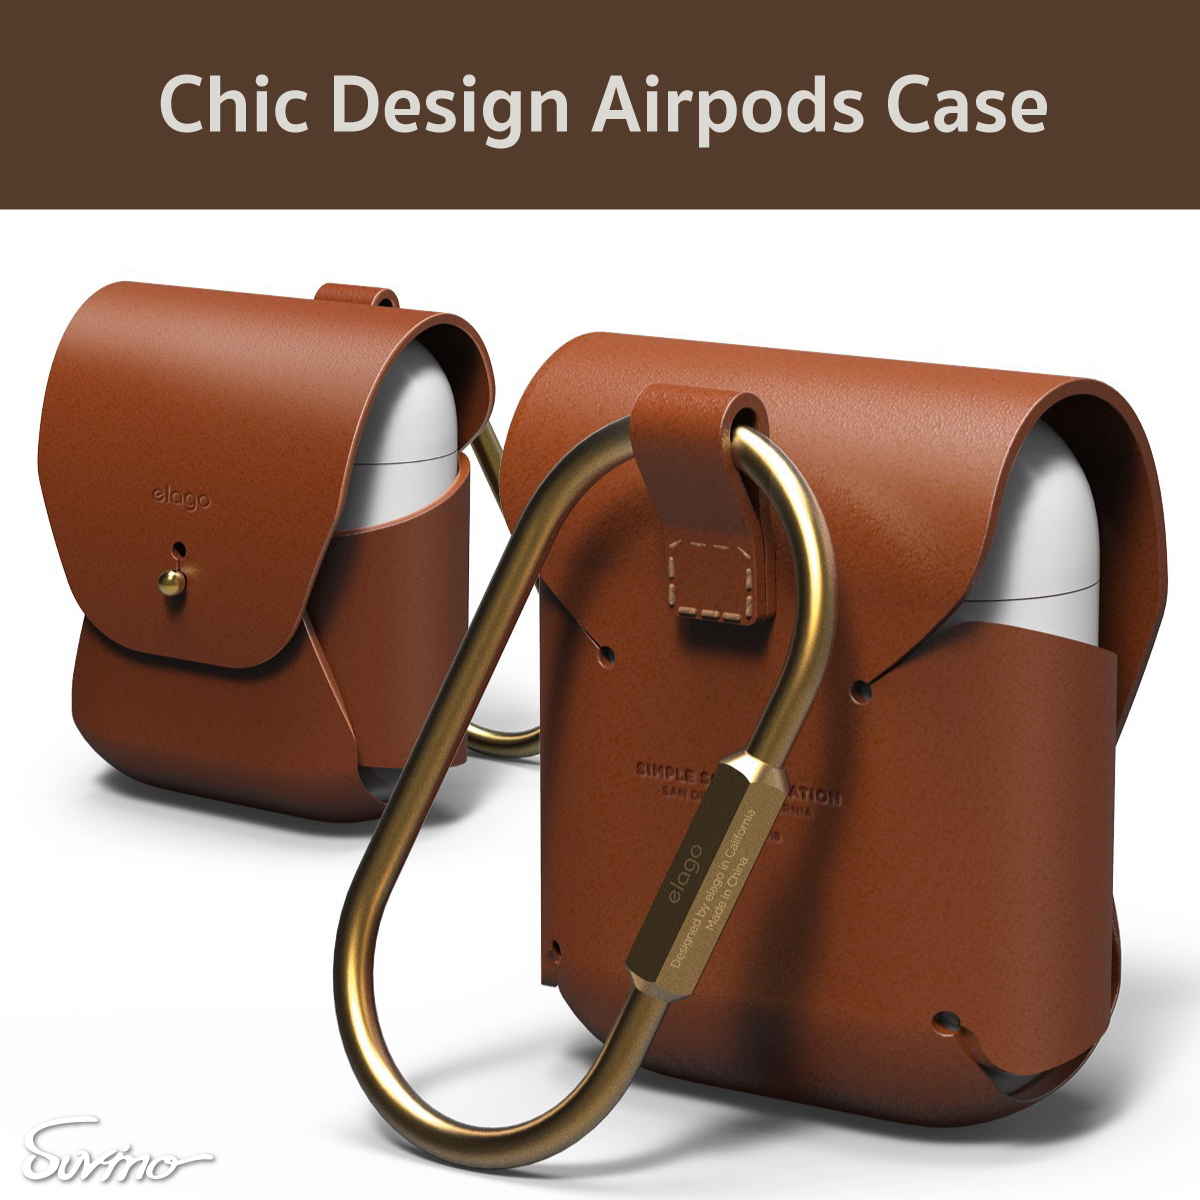 Chic Design Airpods Case